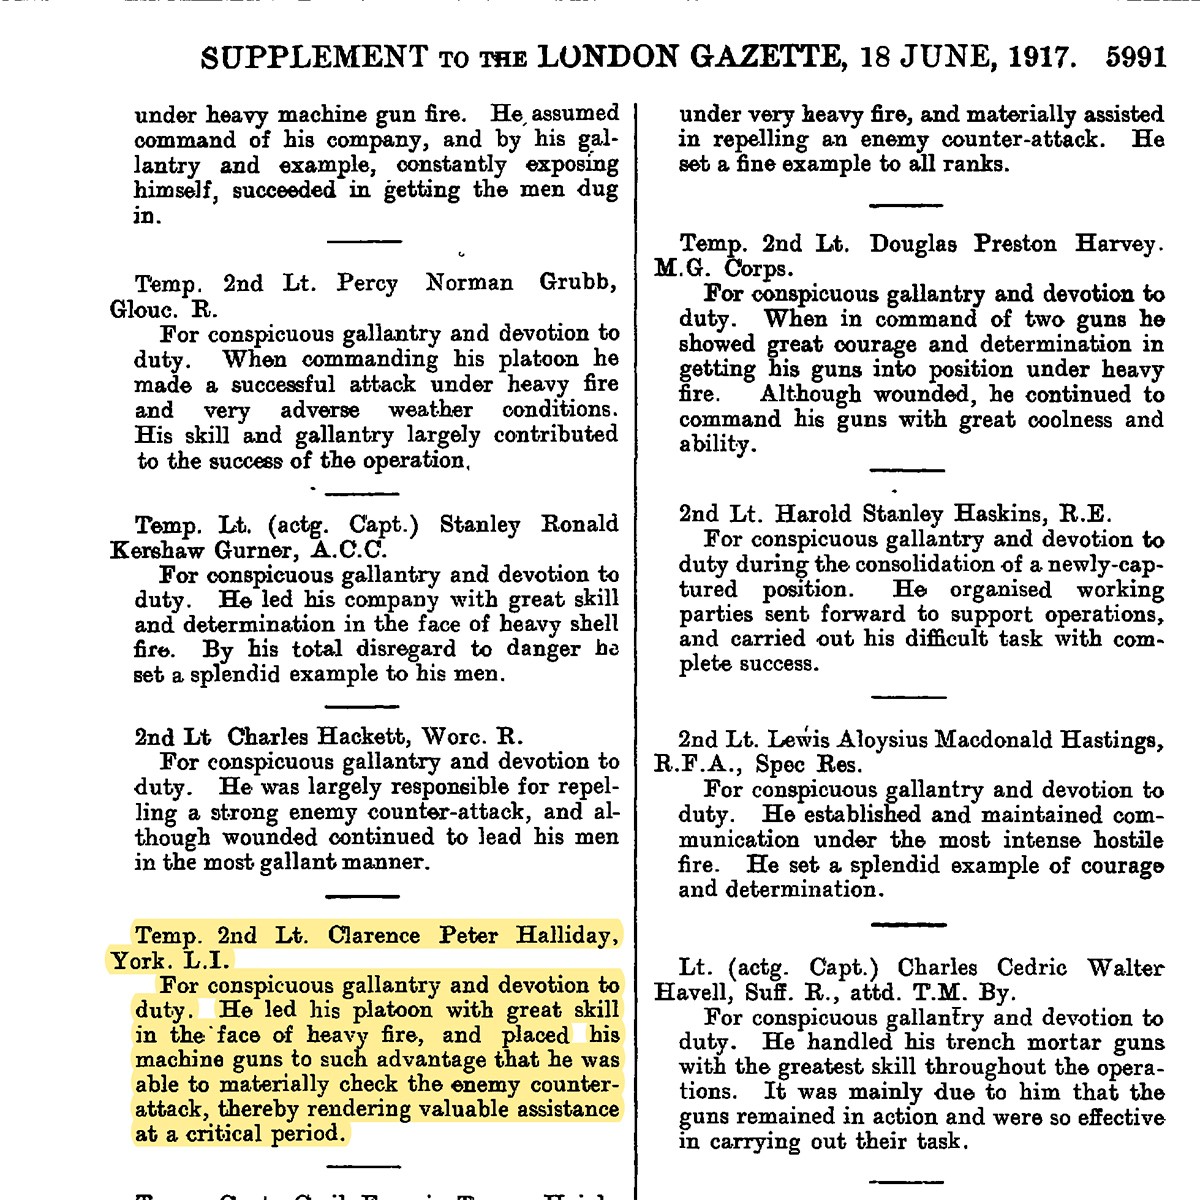 Supplement to the London Gazette, 1917 June 18 (Military Cross)